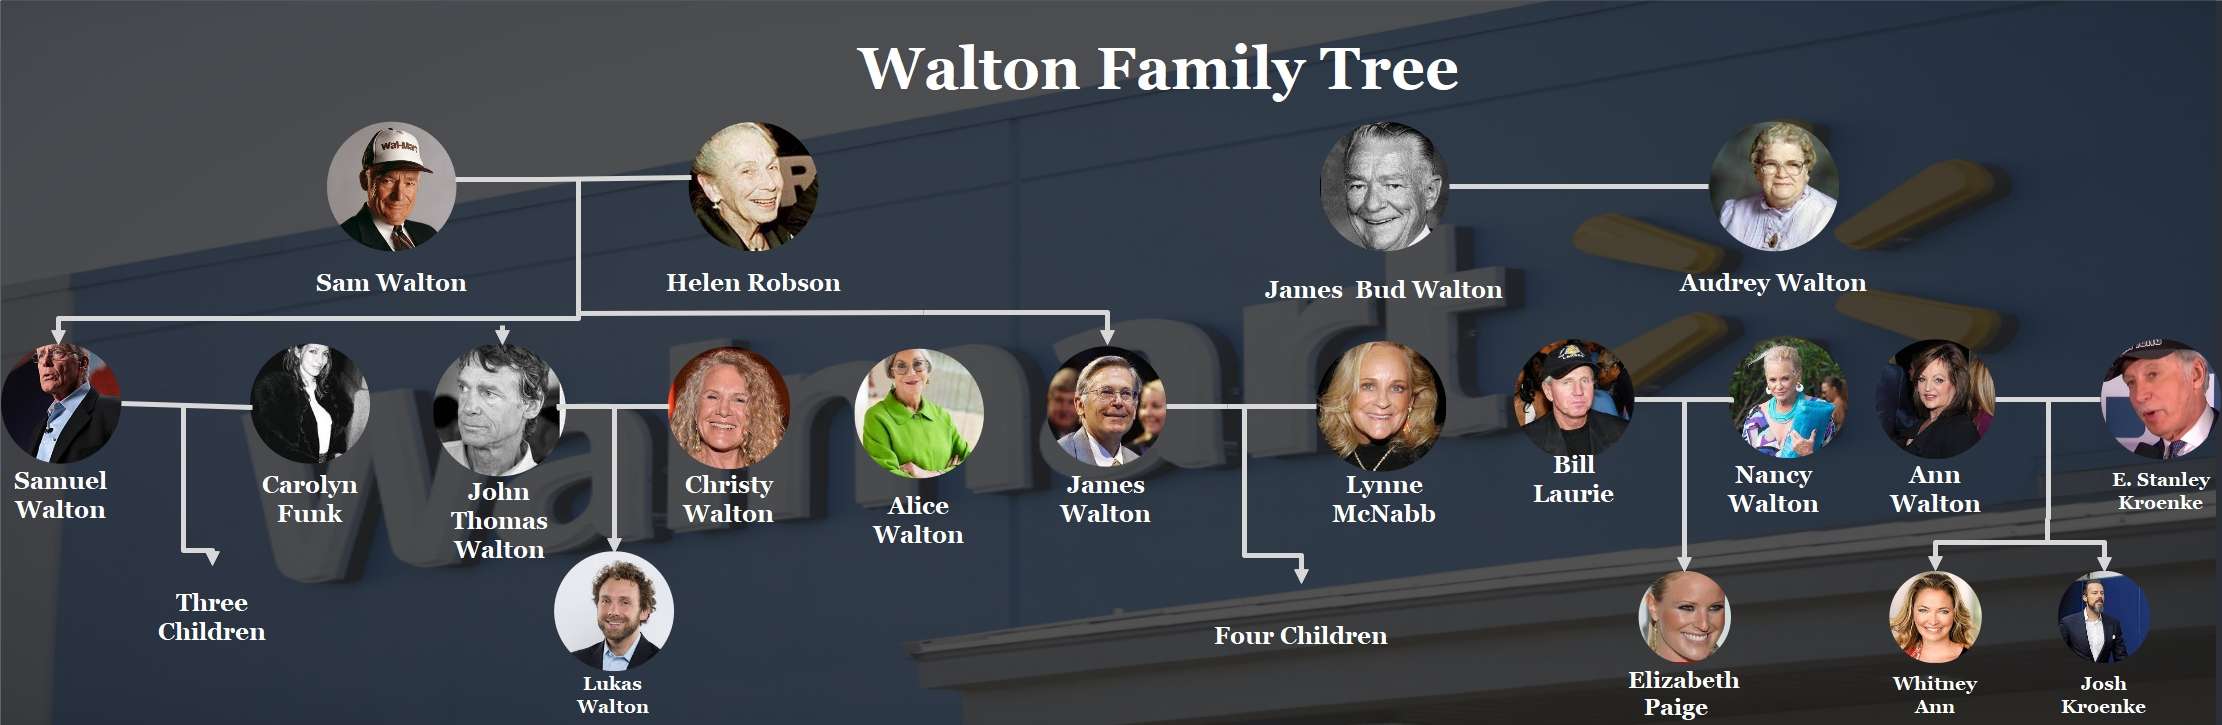 Walton family tree diagram